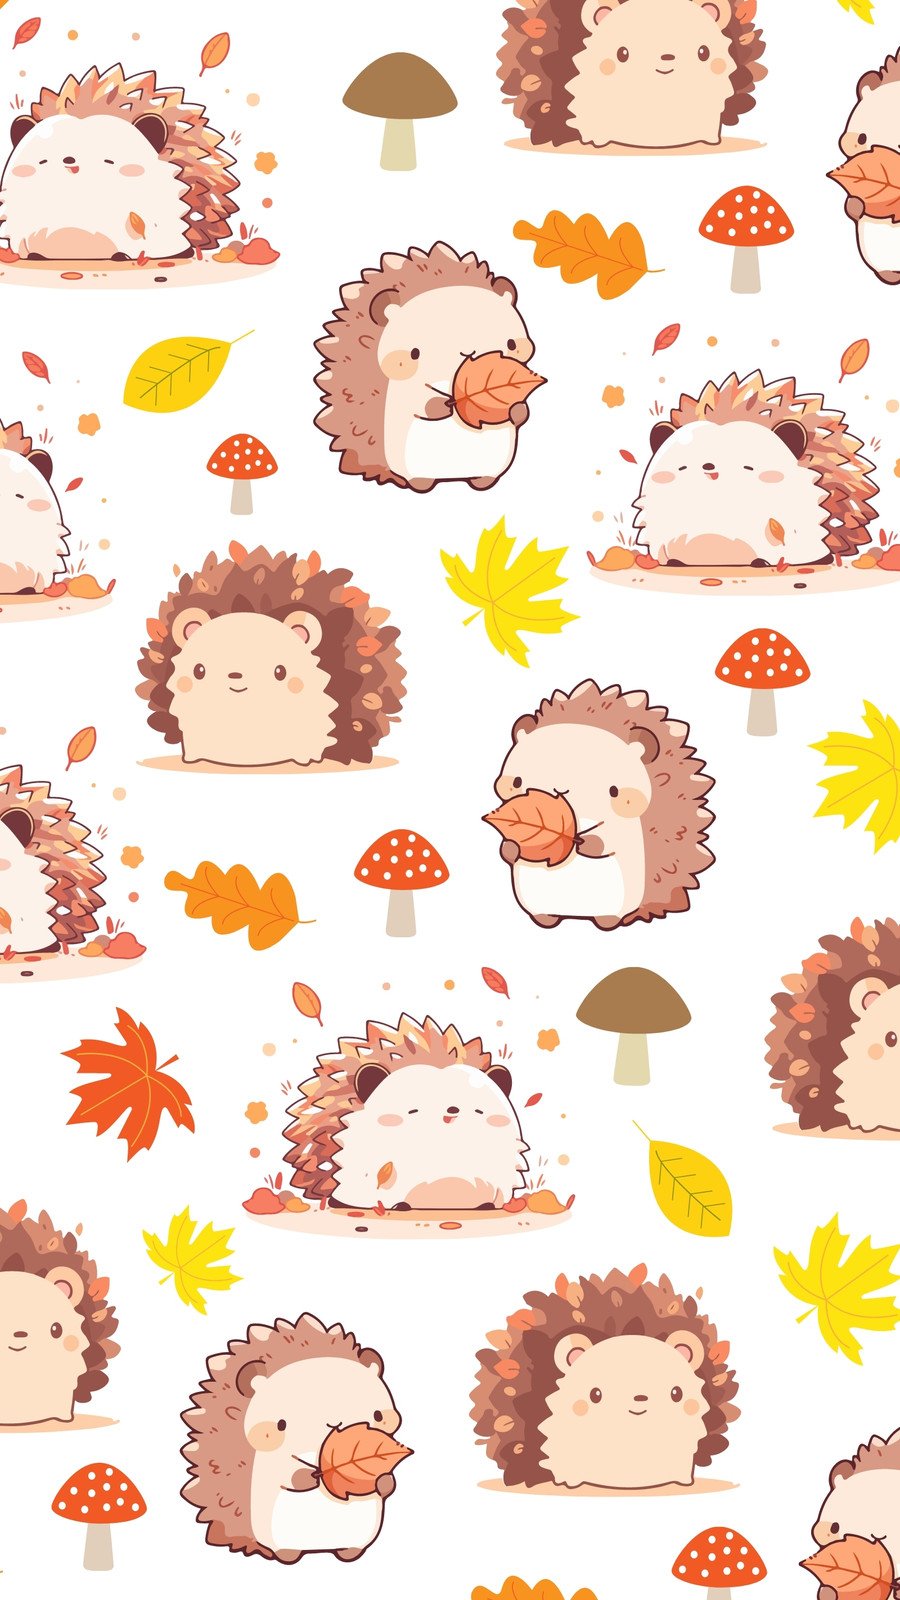 24 Hedgehog Wallpapers - Wallpaperboat